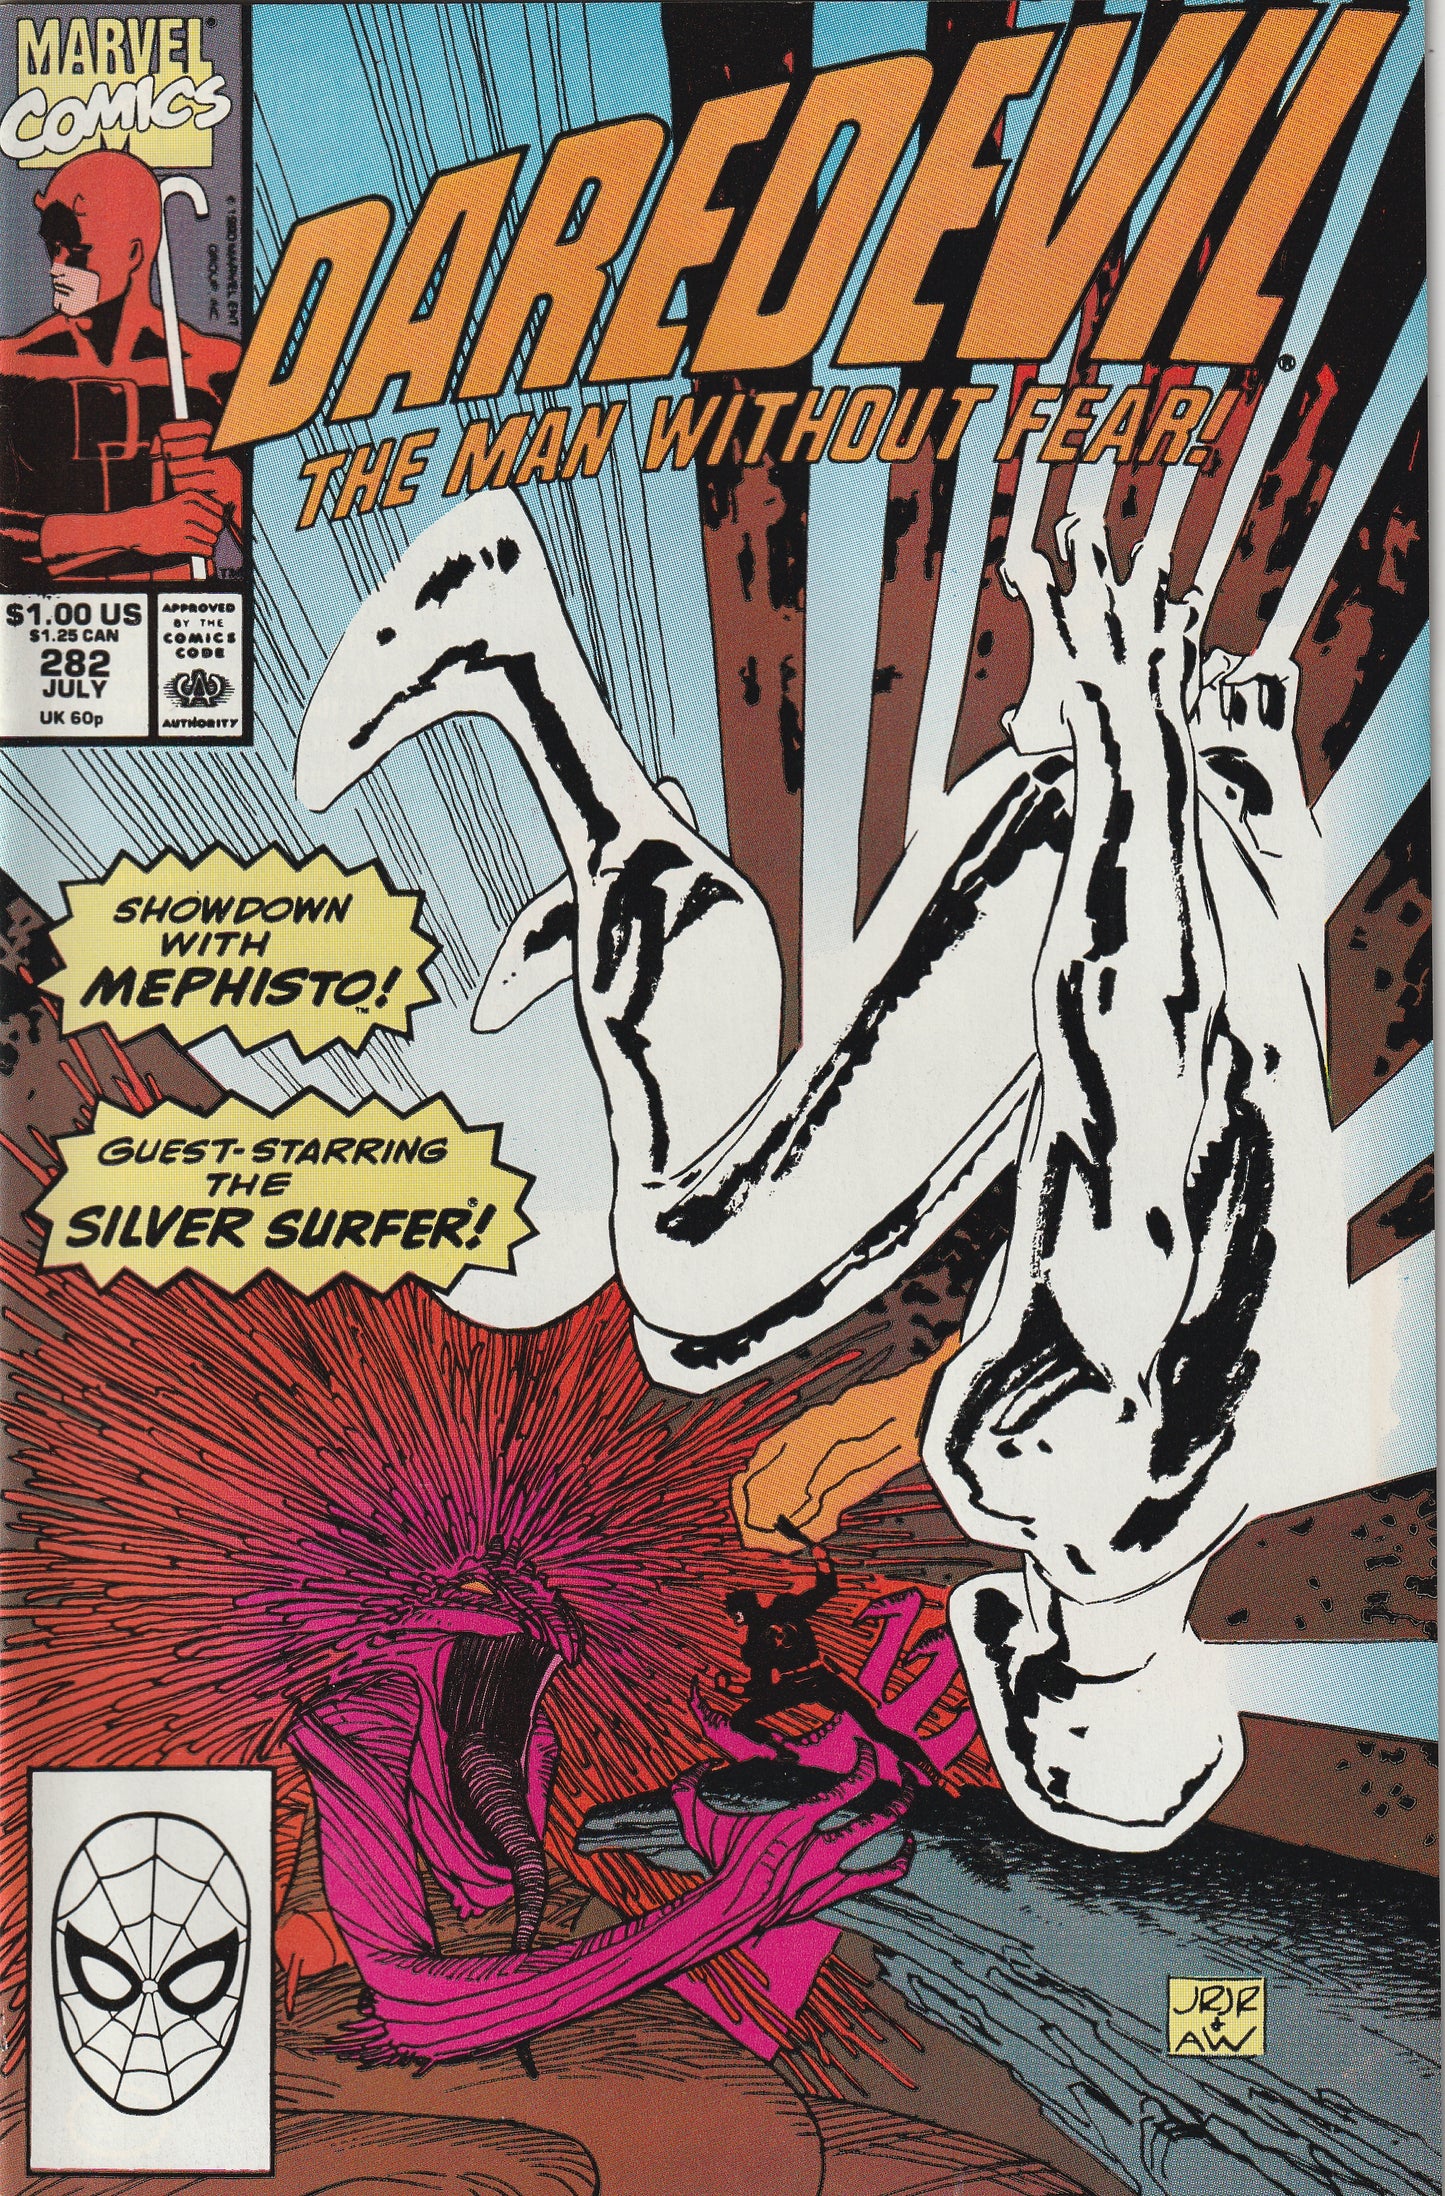 Daredevil #282 (1990) - Guest starring Silver Surfer